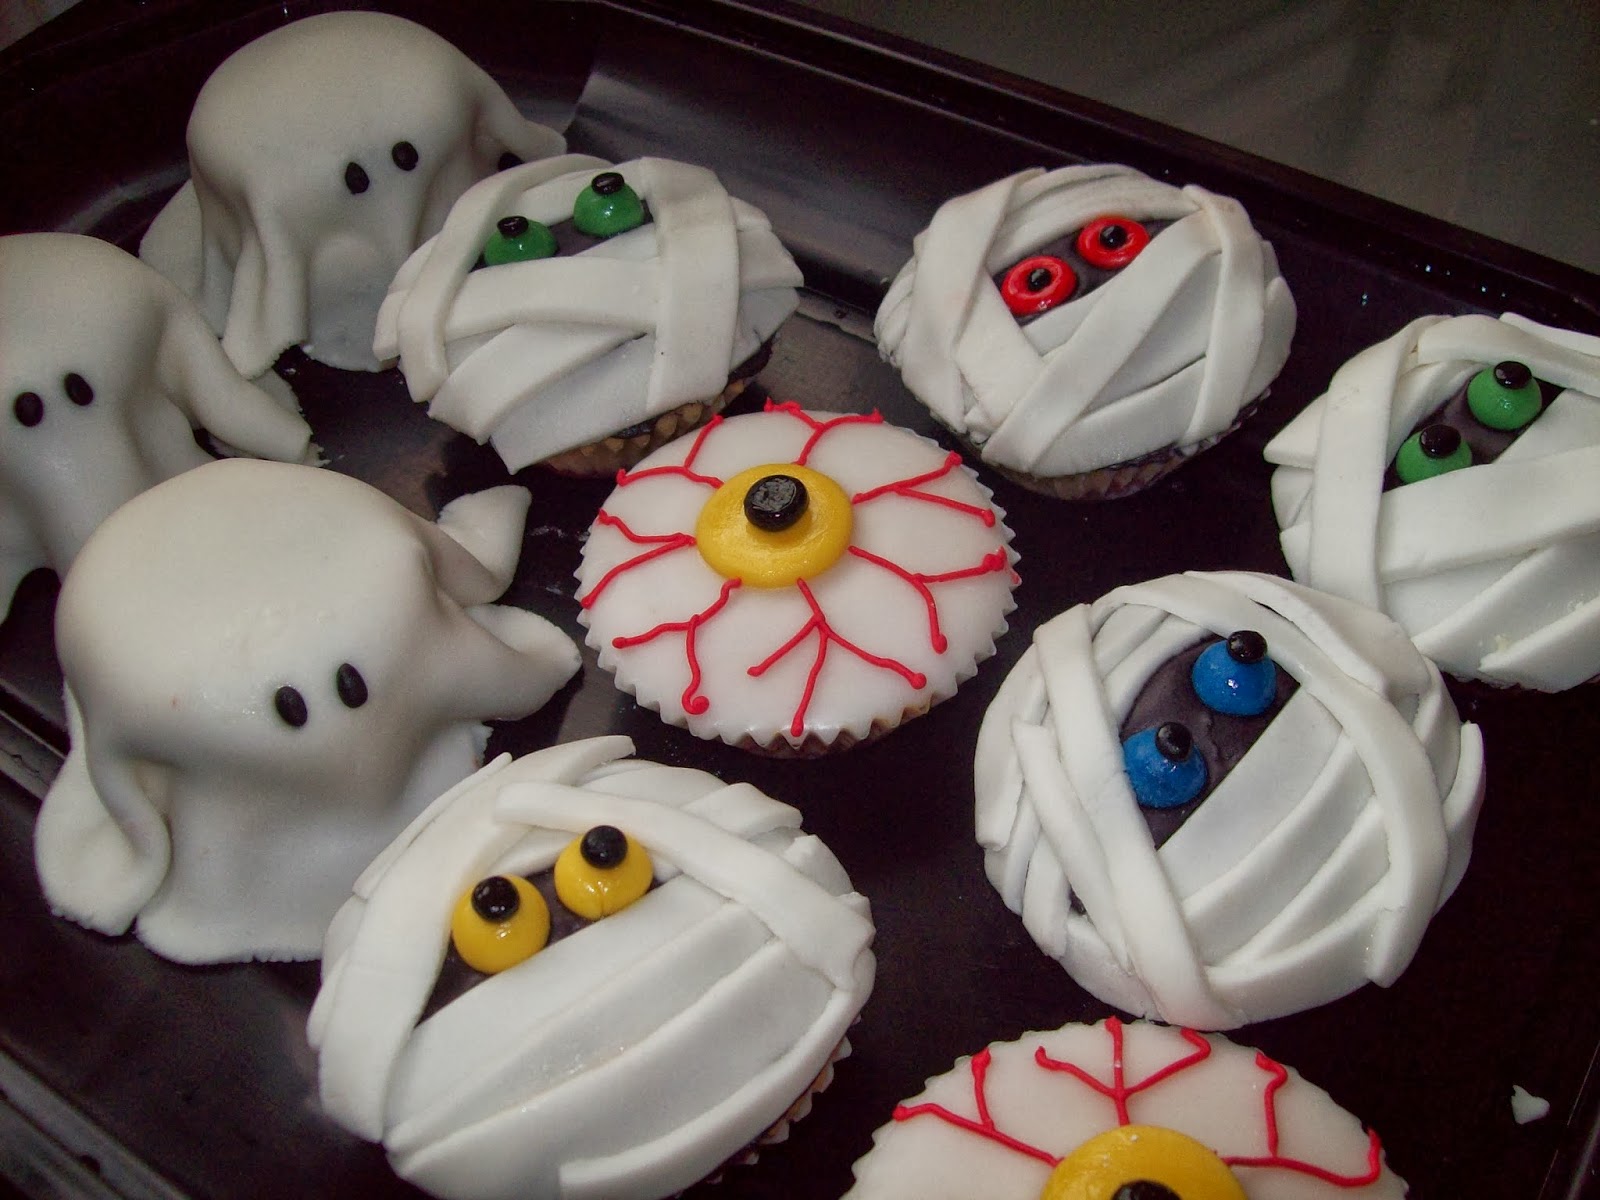 Spooky Halloween cupcakes decorations